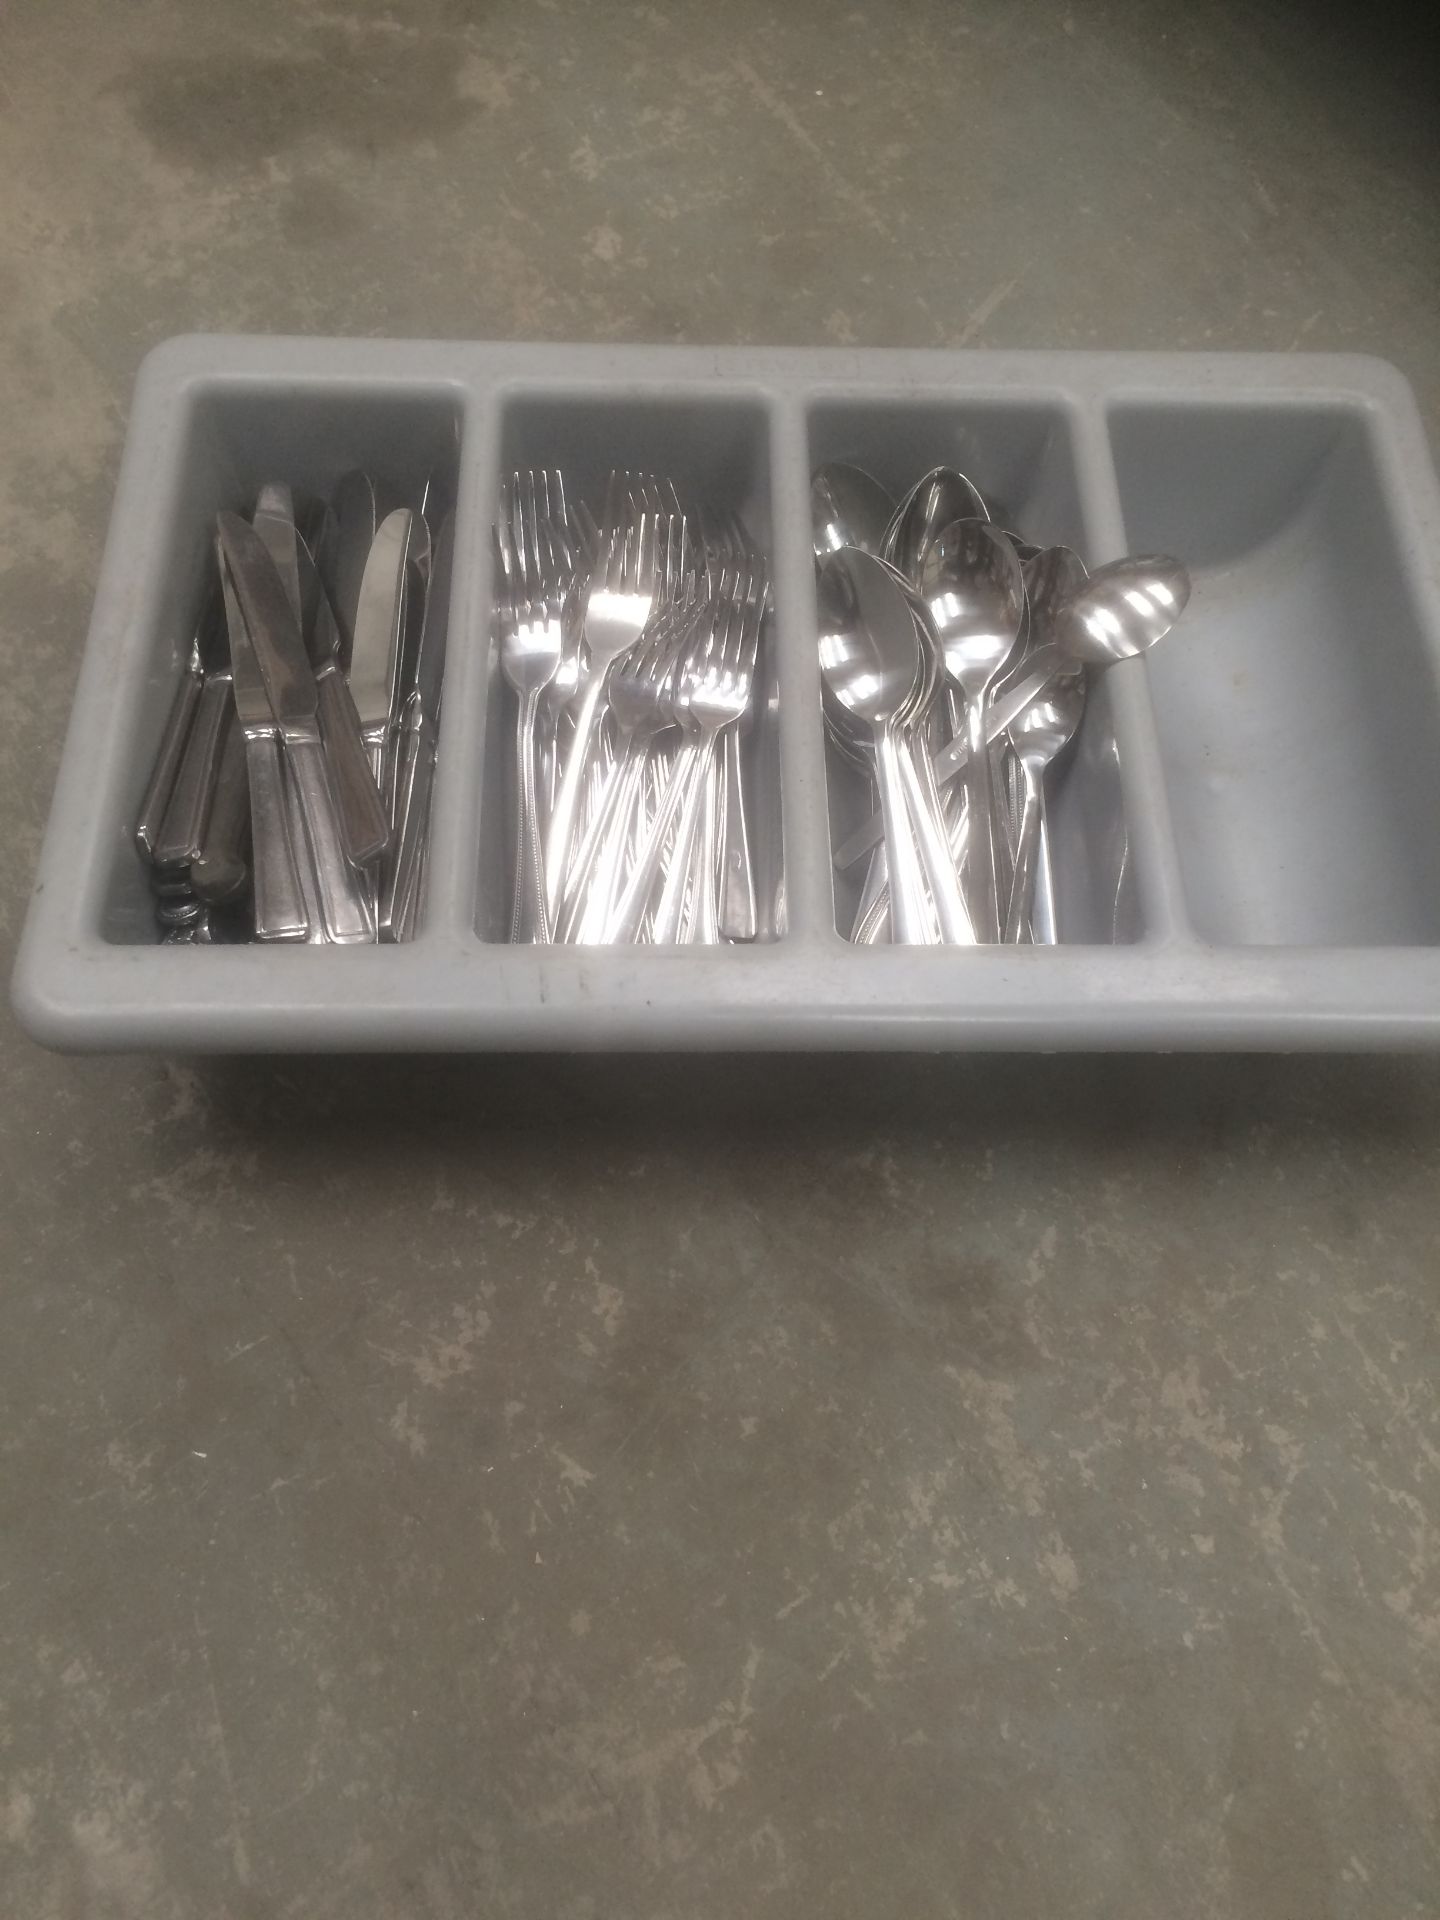 Knives, Forks, Spoons, in Grey Tote Box, ..